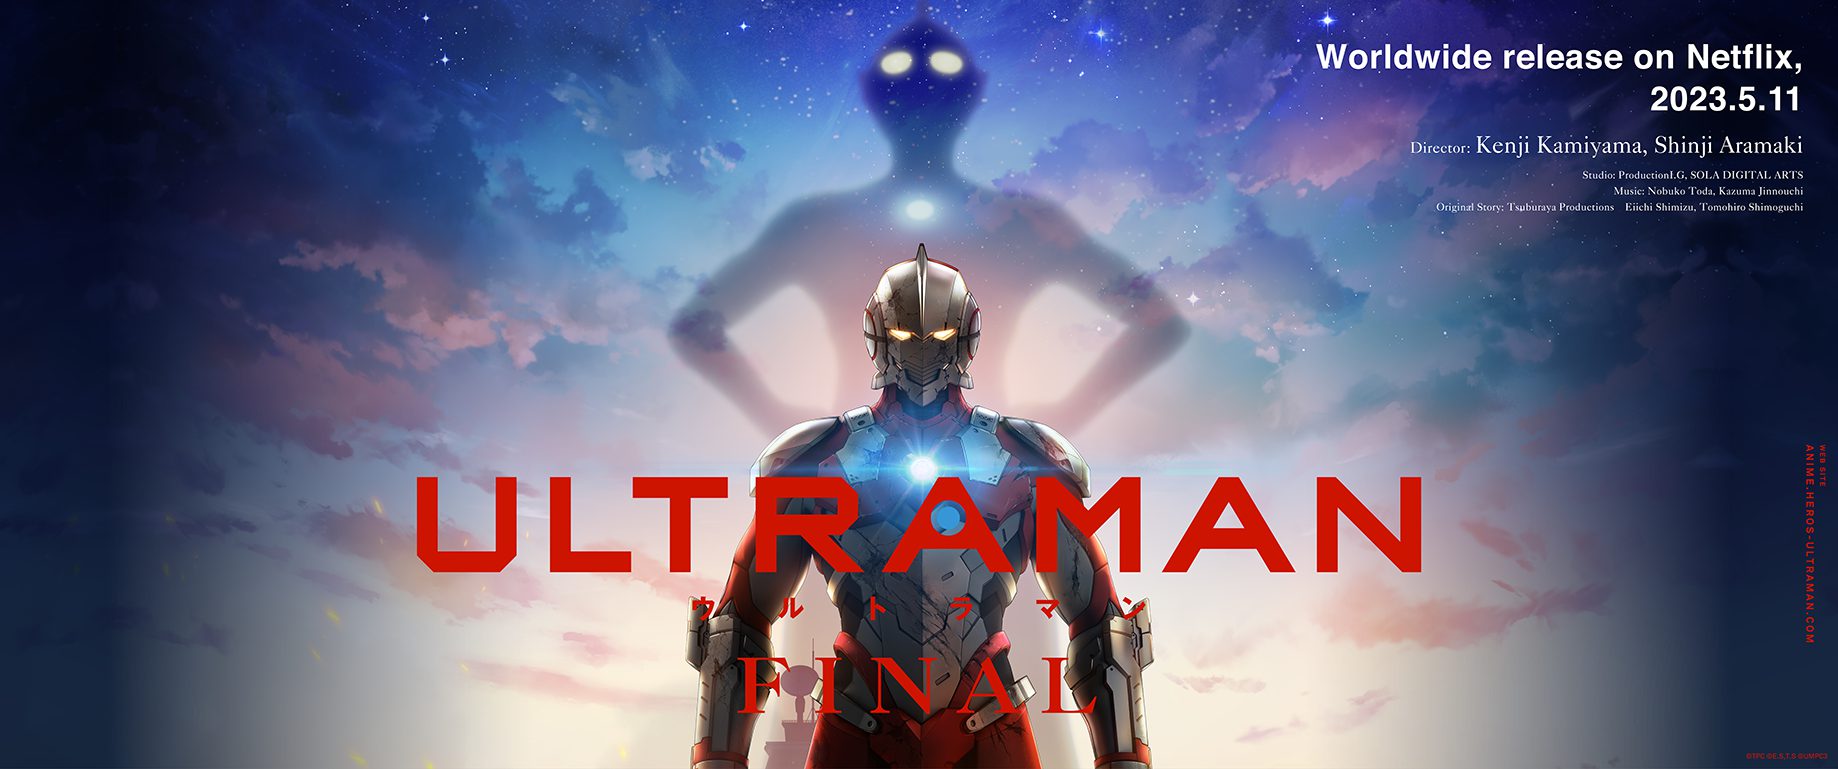 Ultraman Anime- FINAL, Announcement Visual